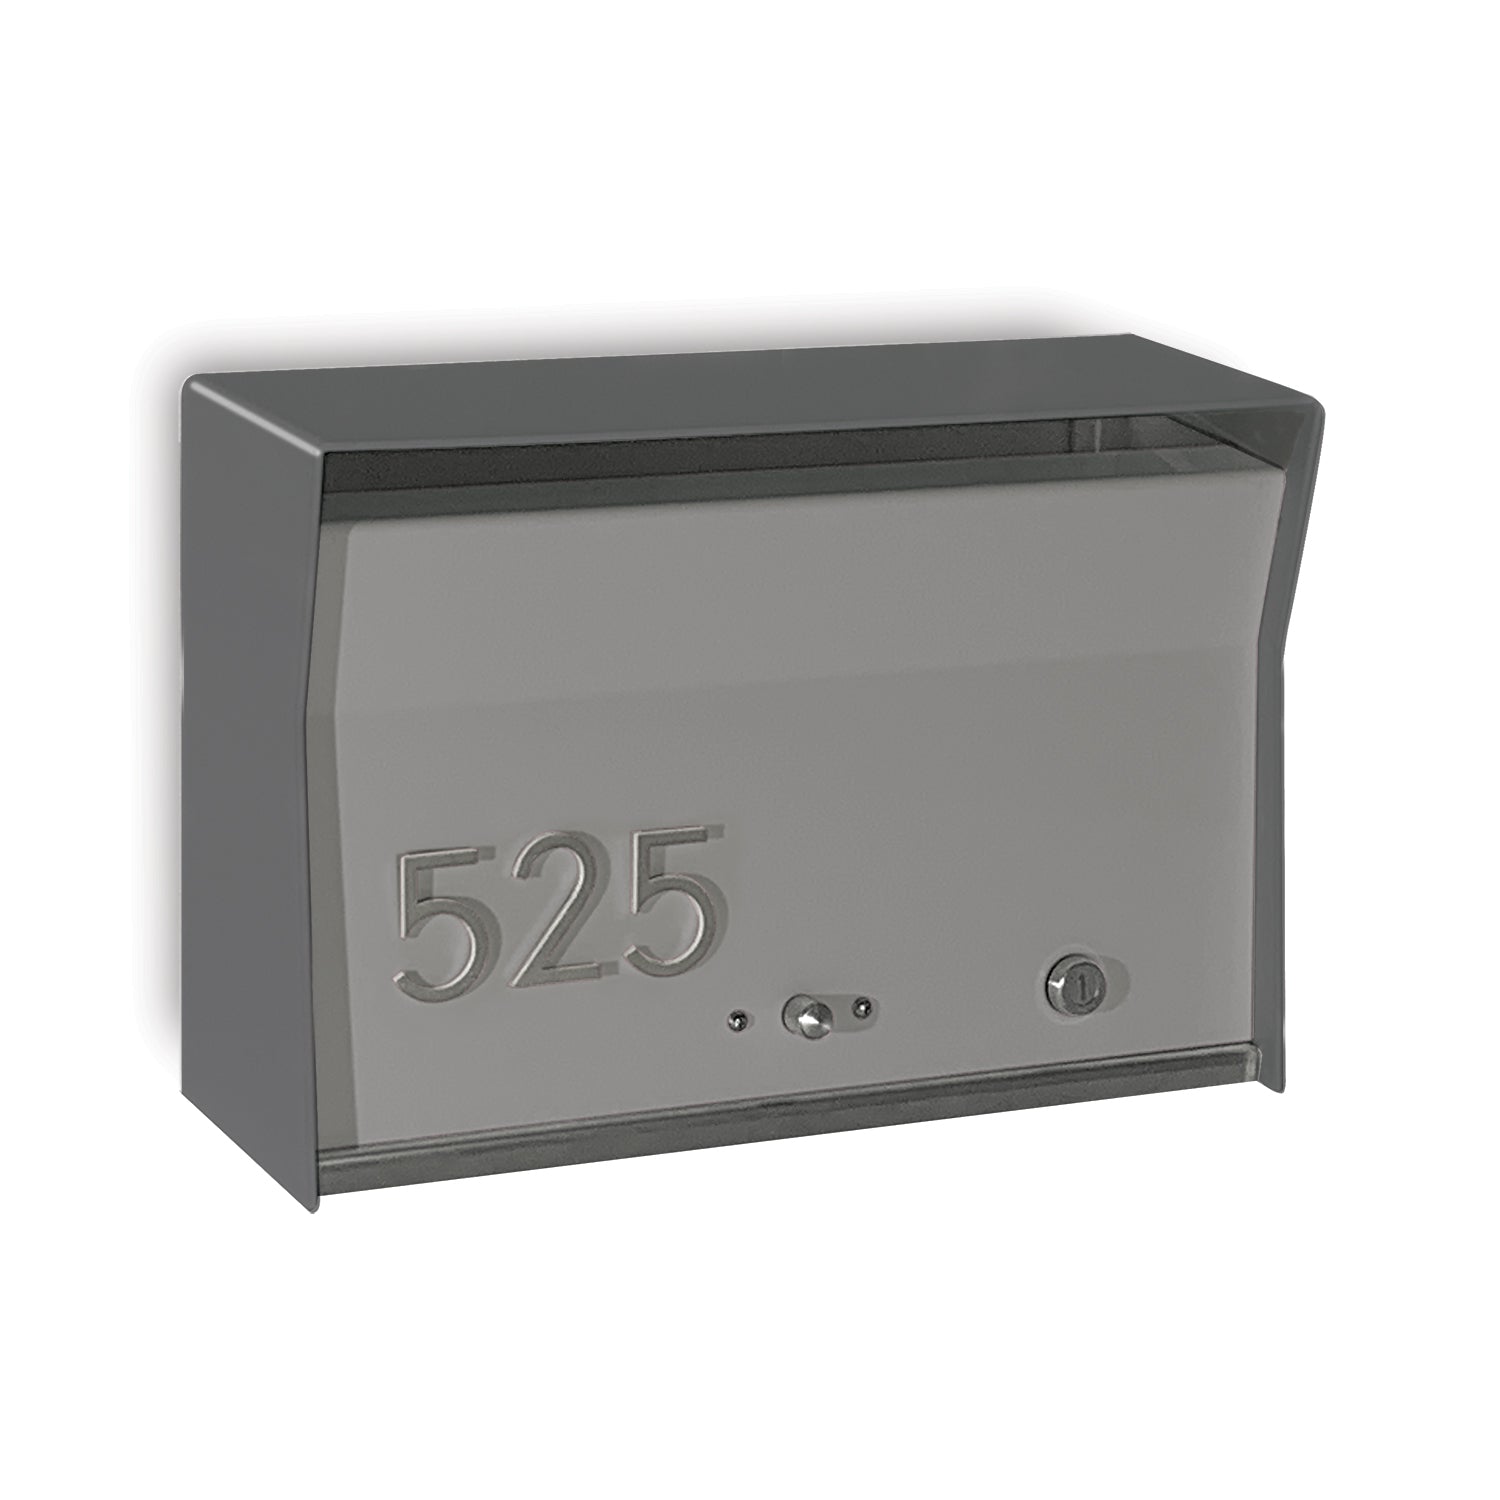 RetroBox Locking Wall Mount Mailbox in designer grey and stainless steel